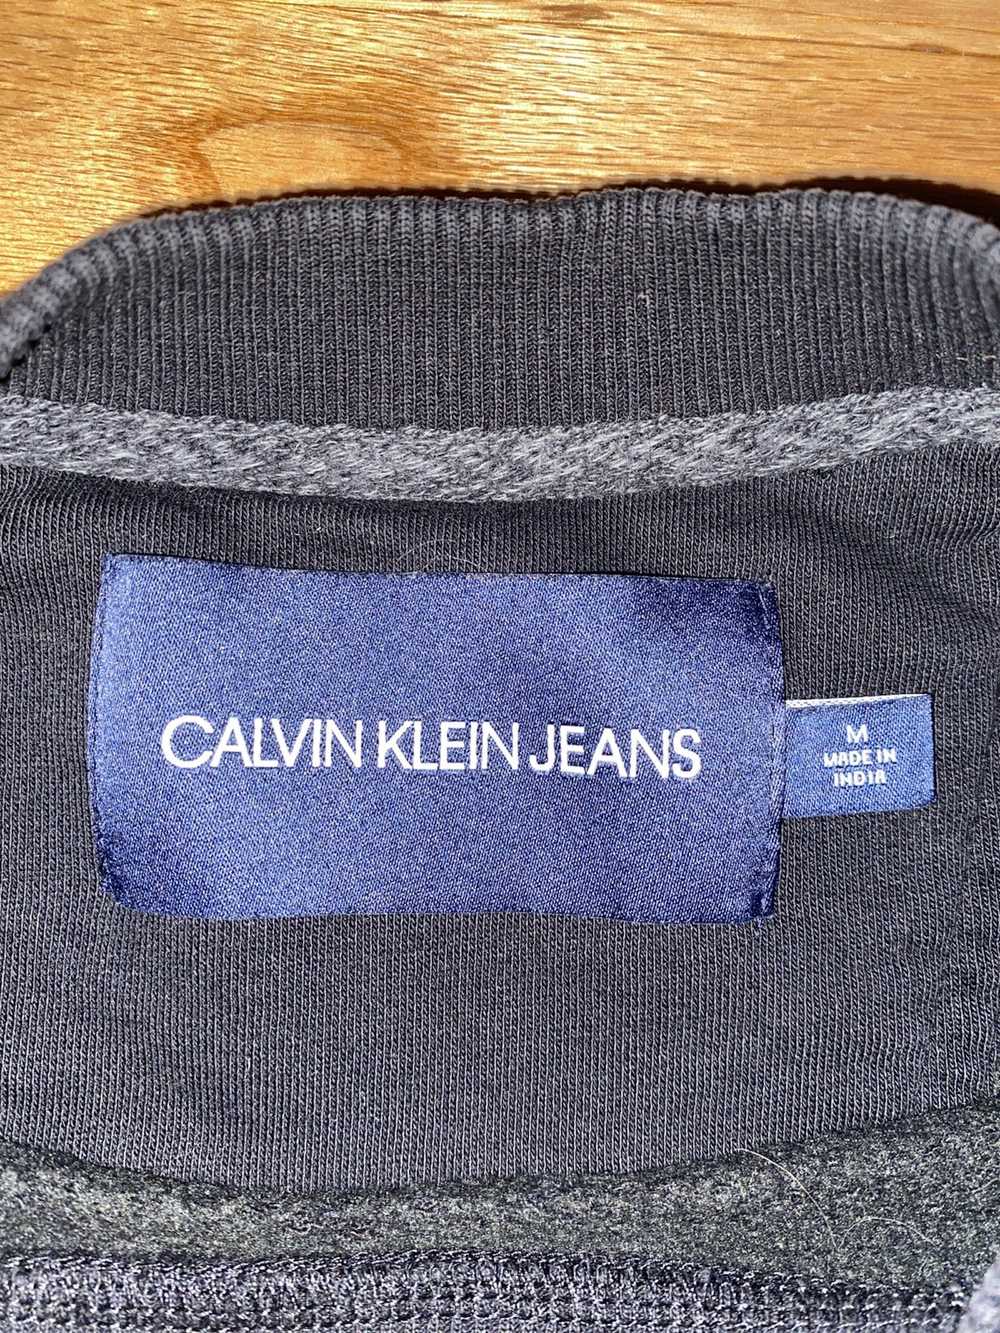 Calvin Klein Calvin Klein Jeans Crewneck Sweater - image 2